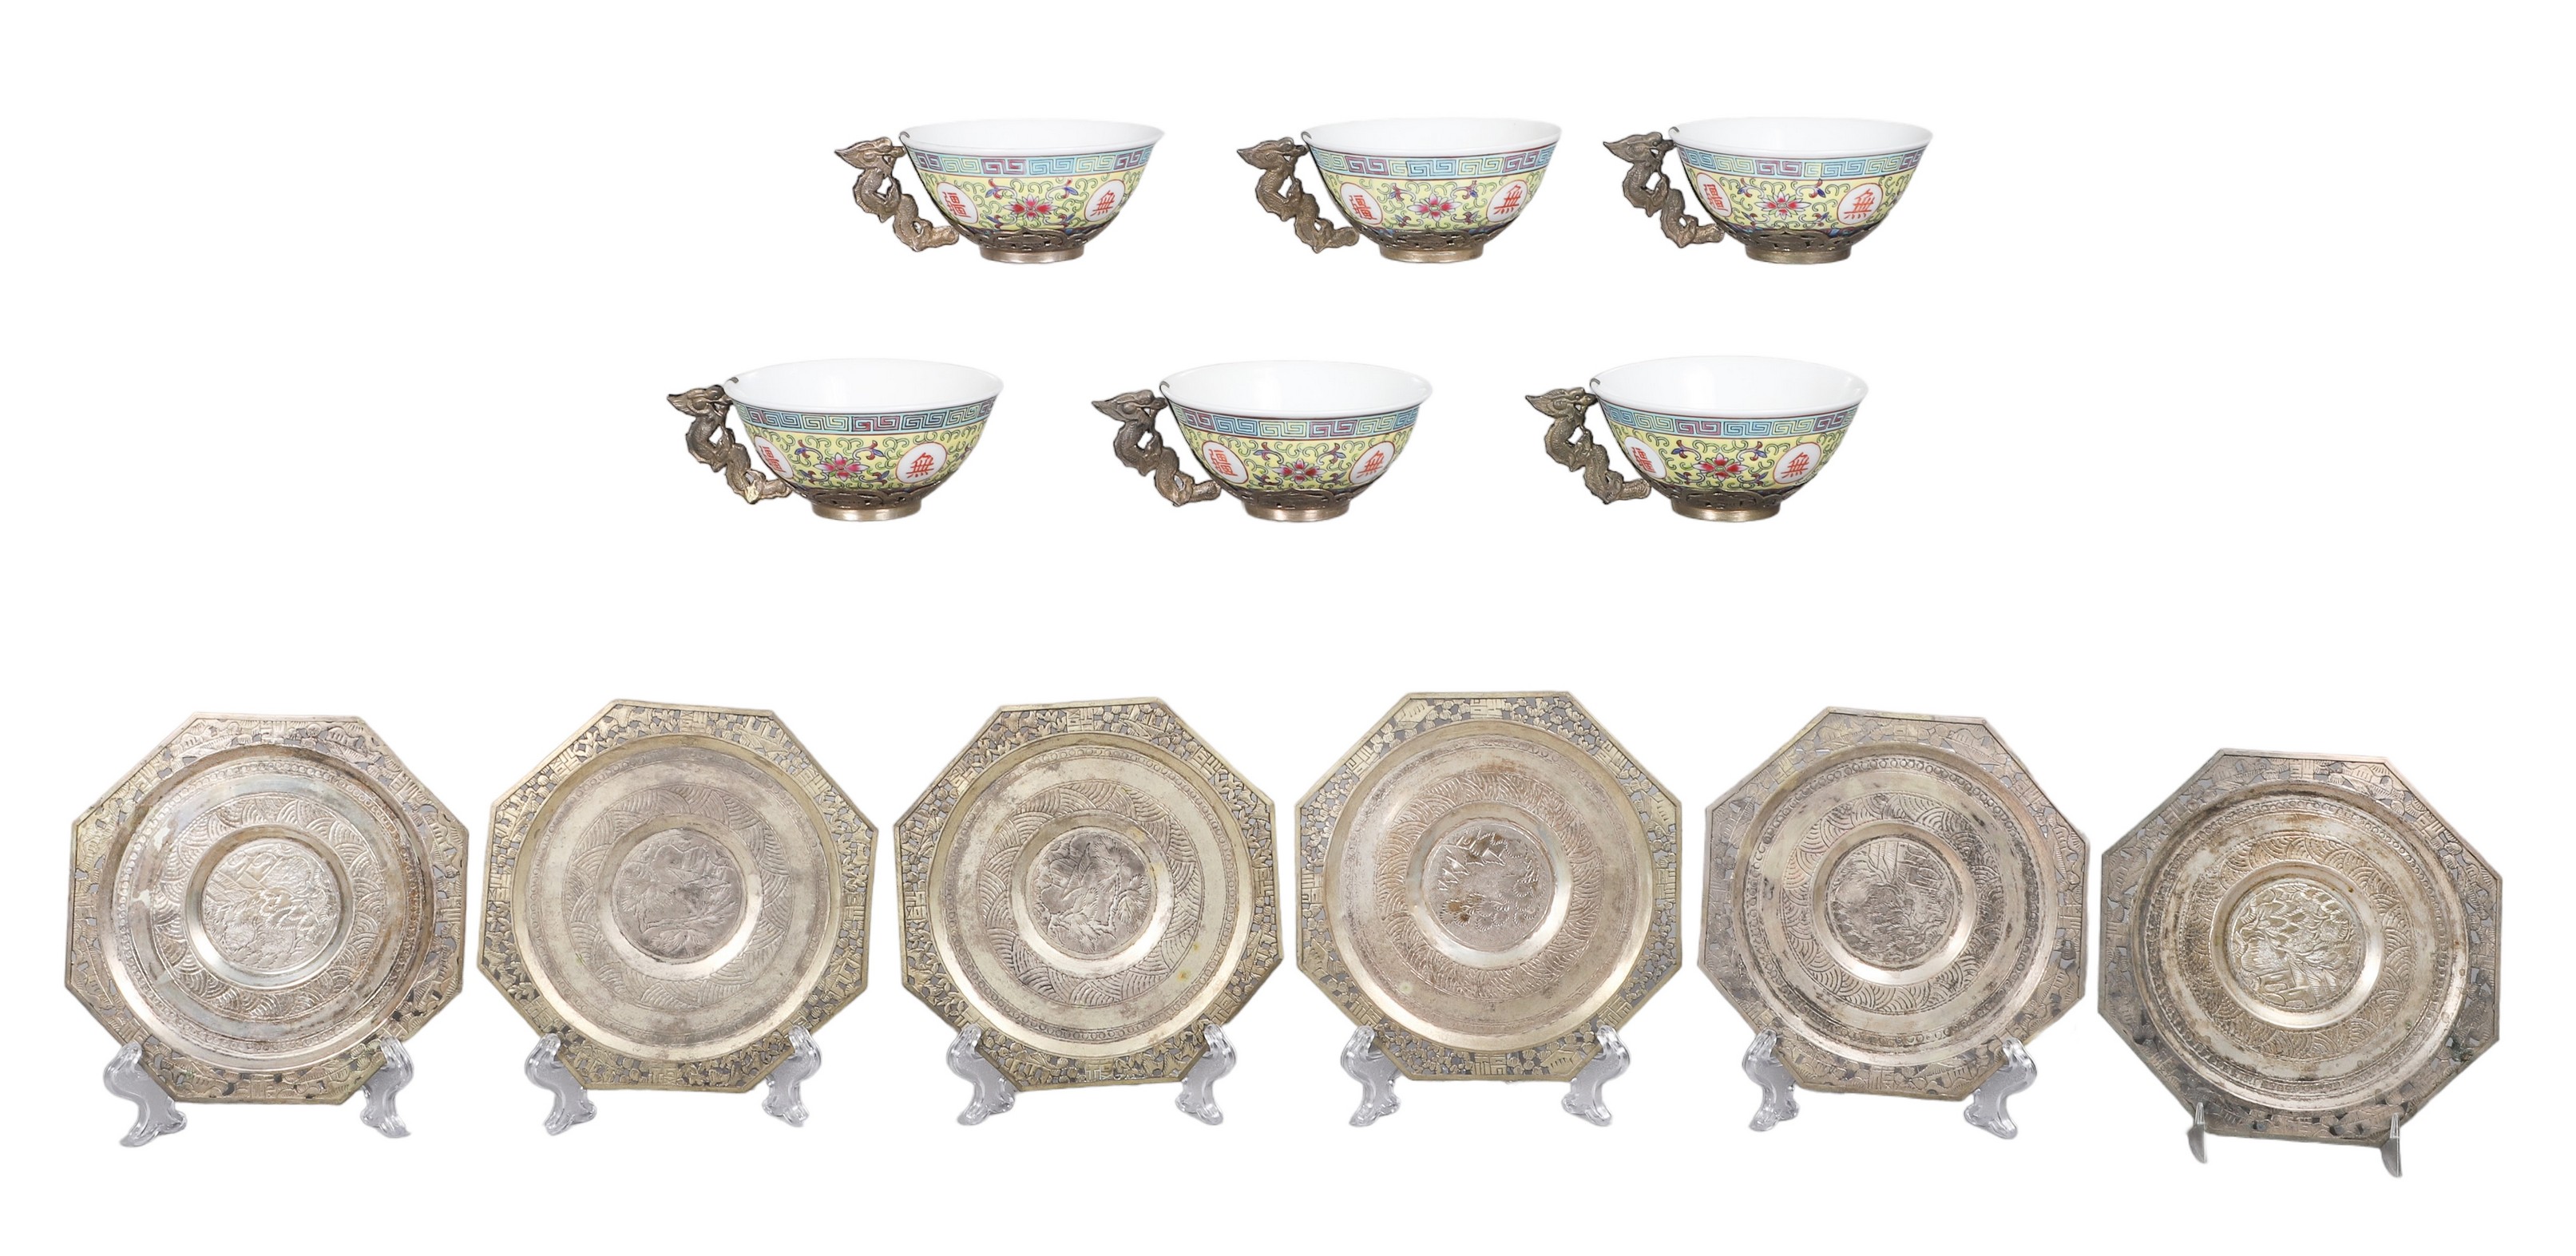  6 Chinese porcelain teacups  2e144d